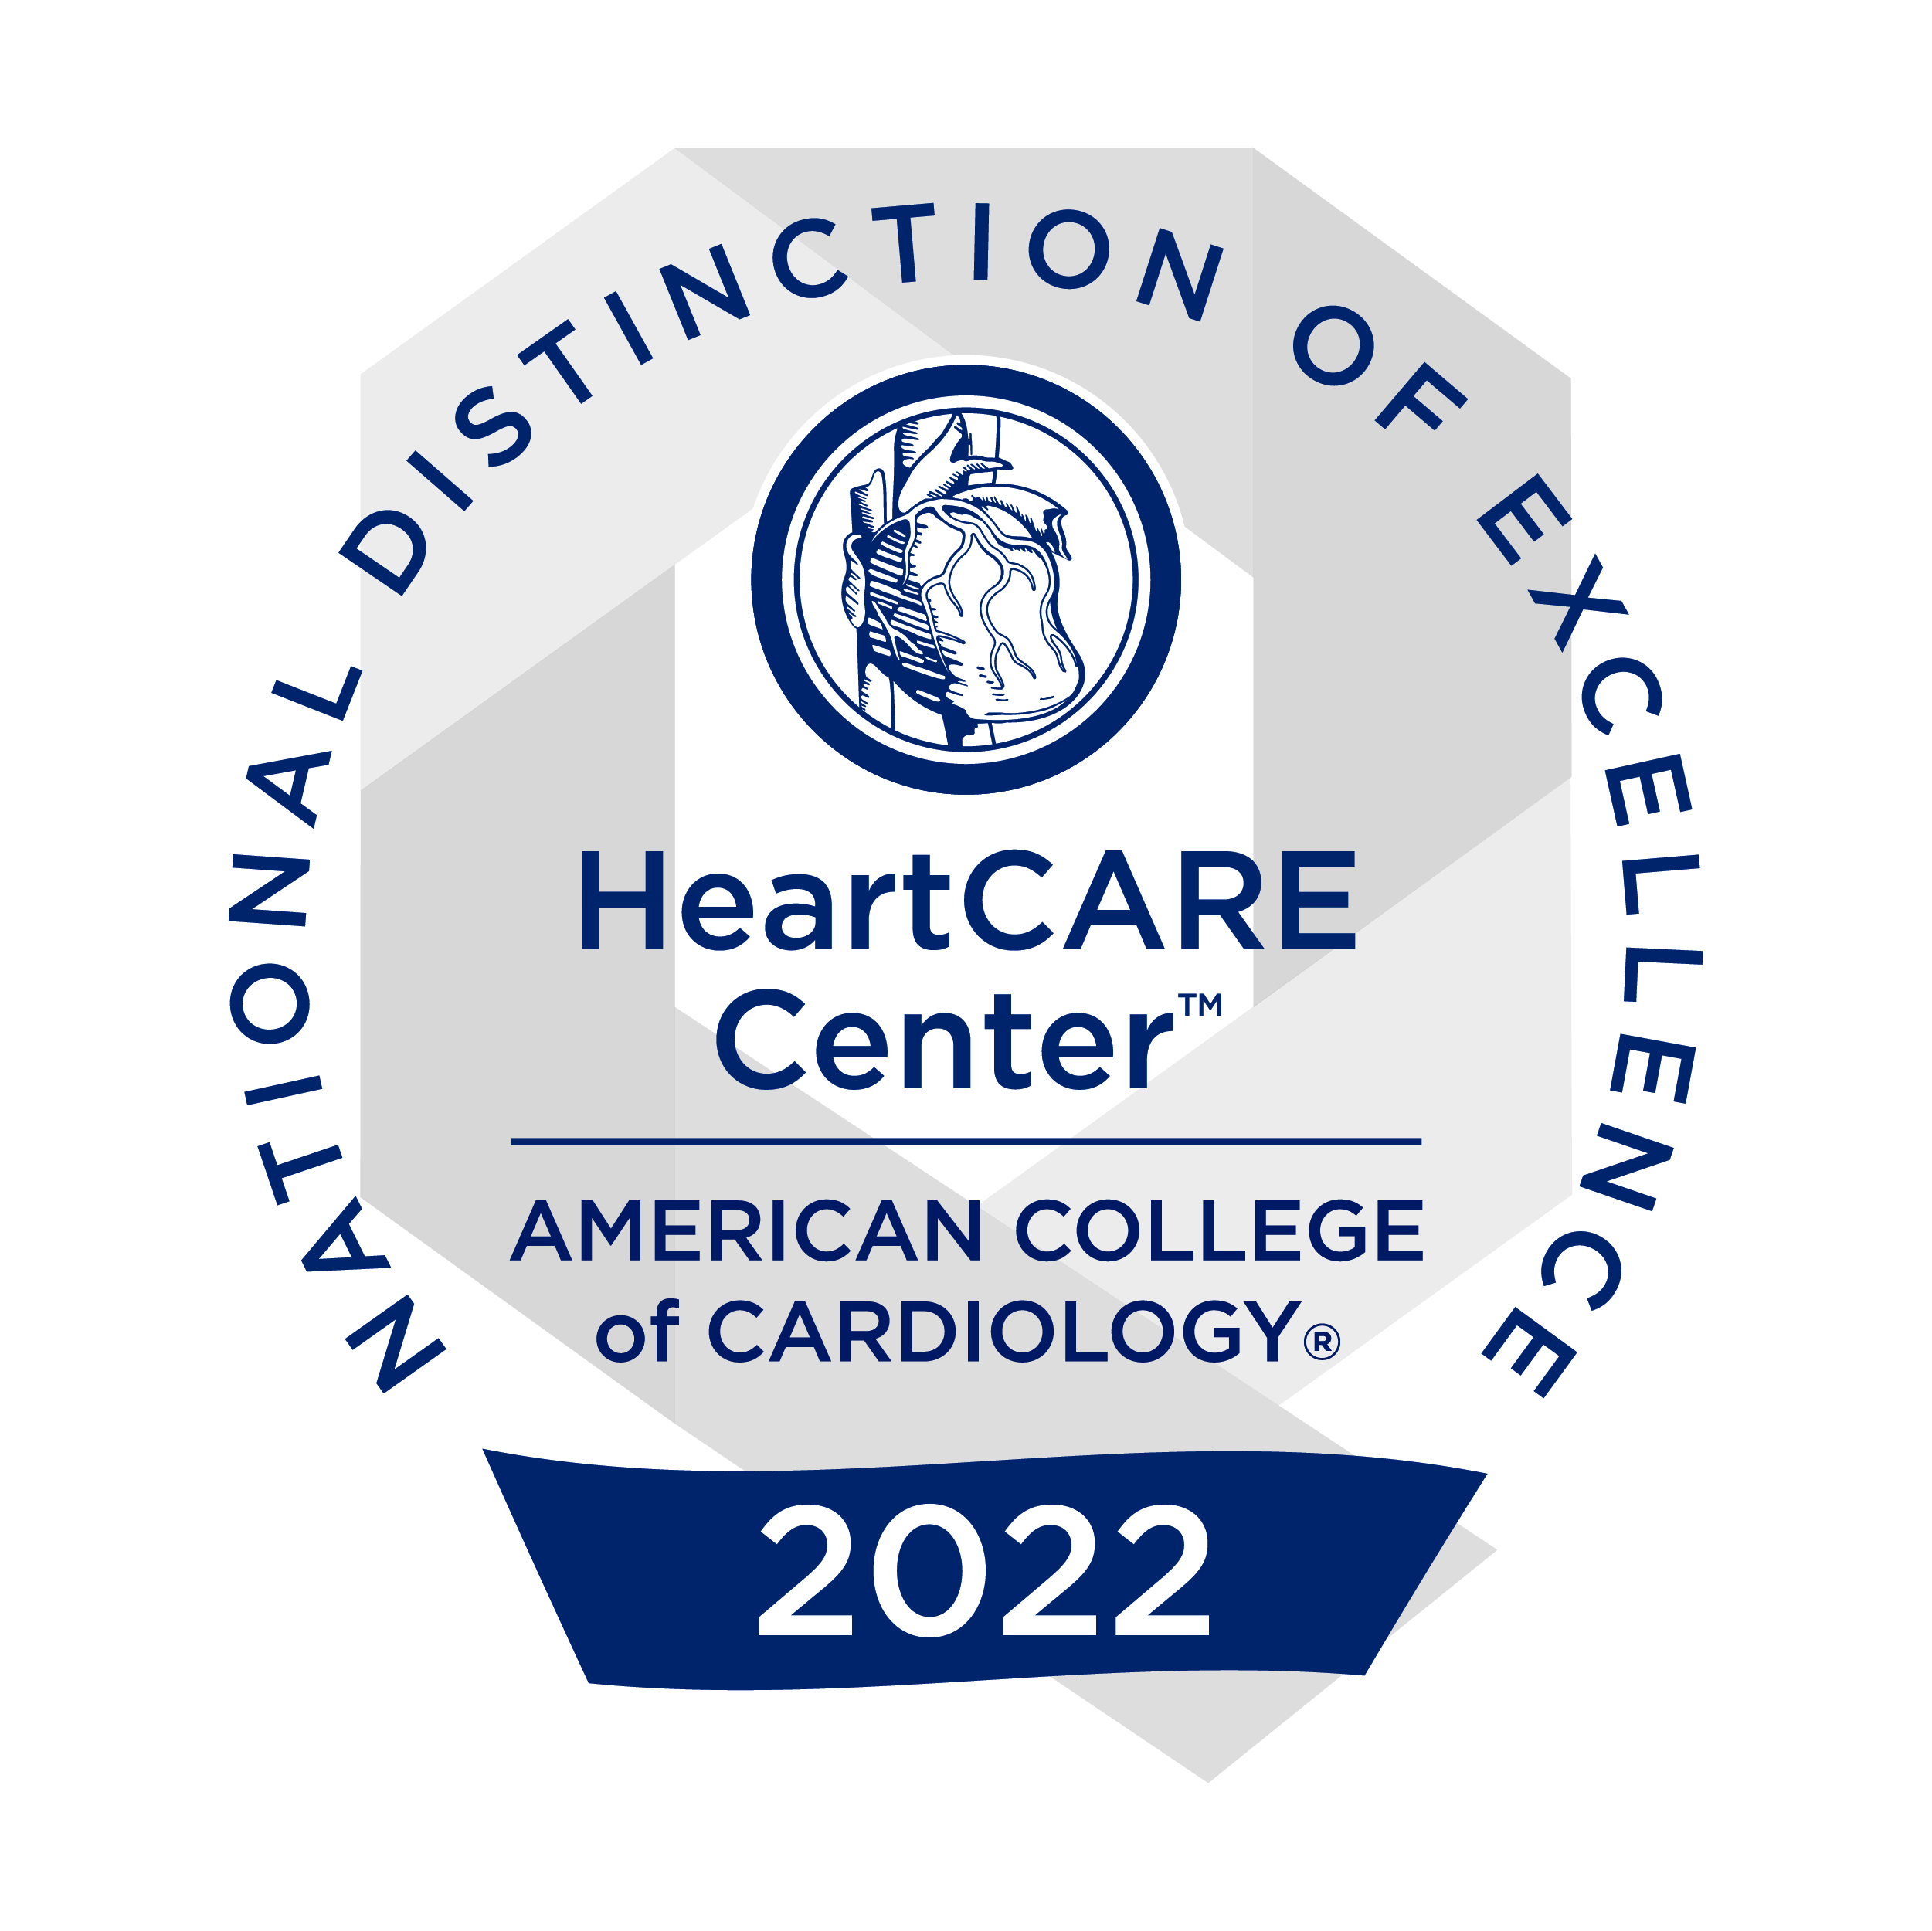 Heart care center logo